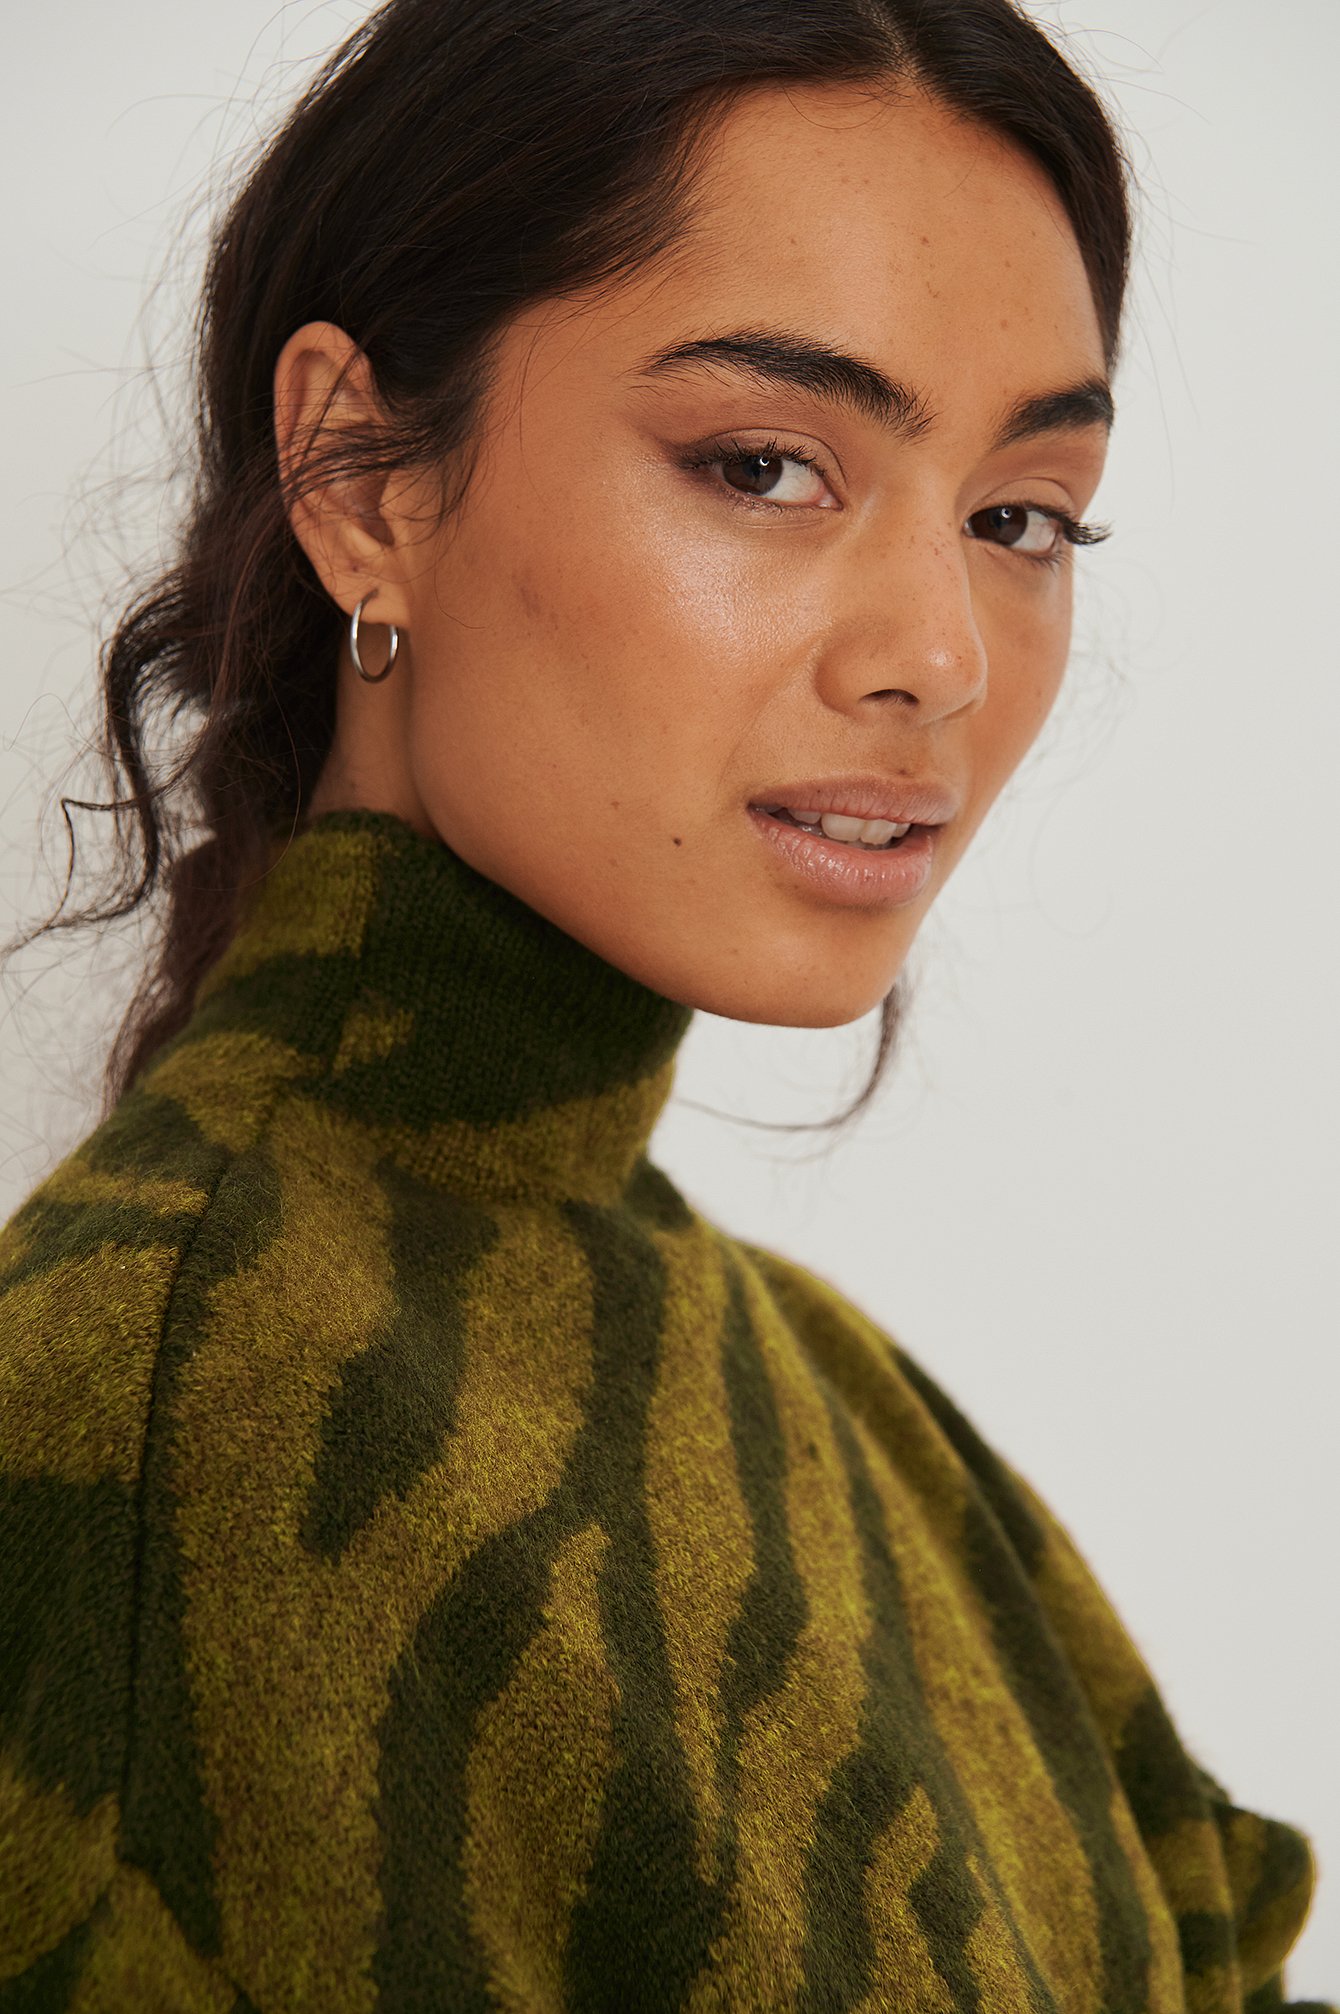 Beige/Green Swirl Jaqcuard Knit Sweater